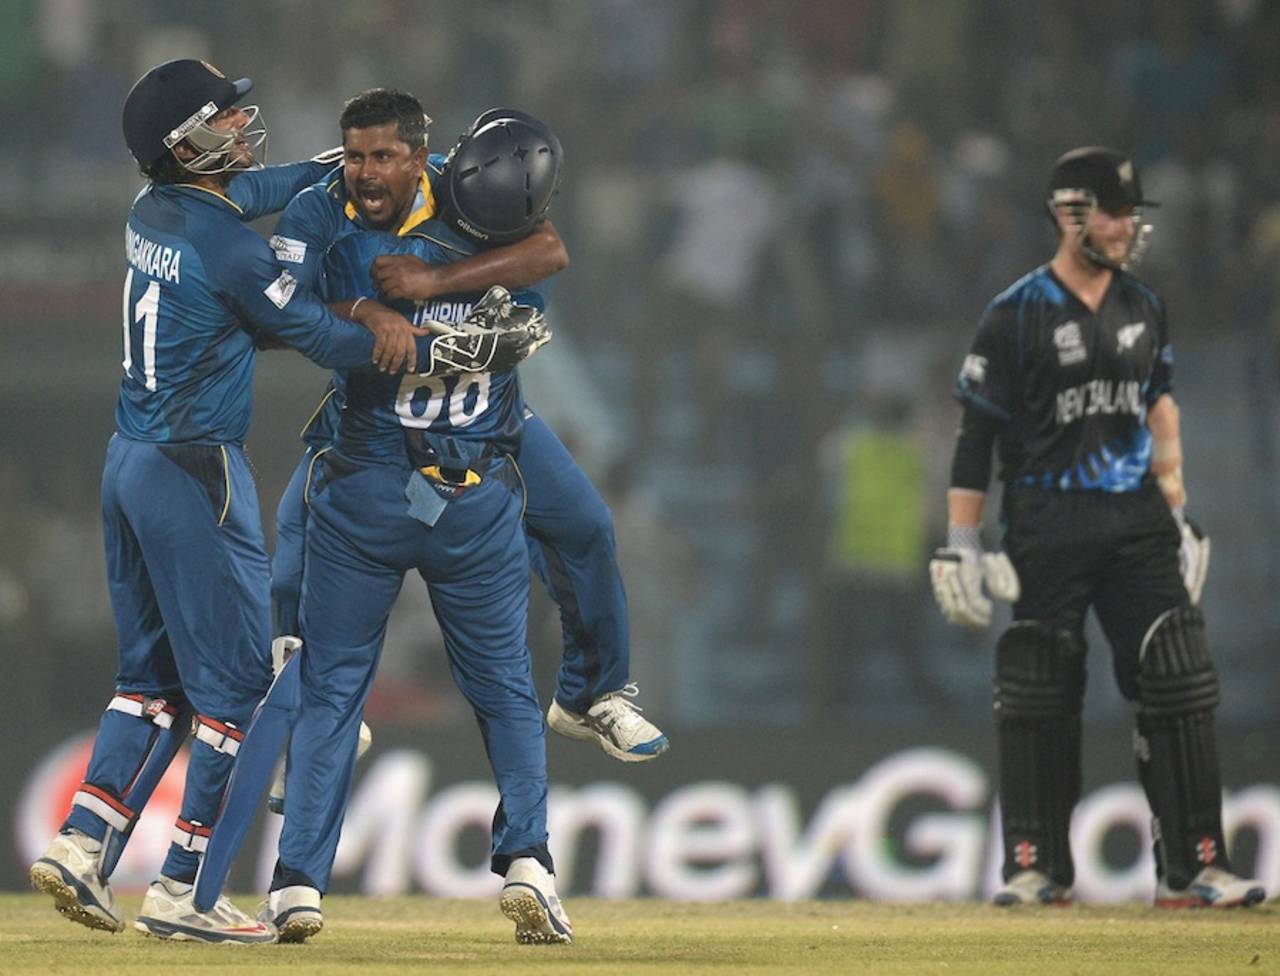 Rangana Herath celebrates Jimmy Neesham's wicket, New Zealand v Sri Lanka, World T20, Group 1, Chittagong, March 31, 2014